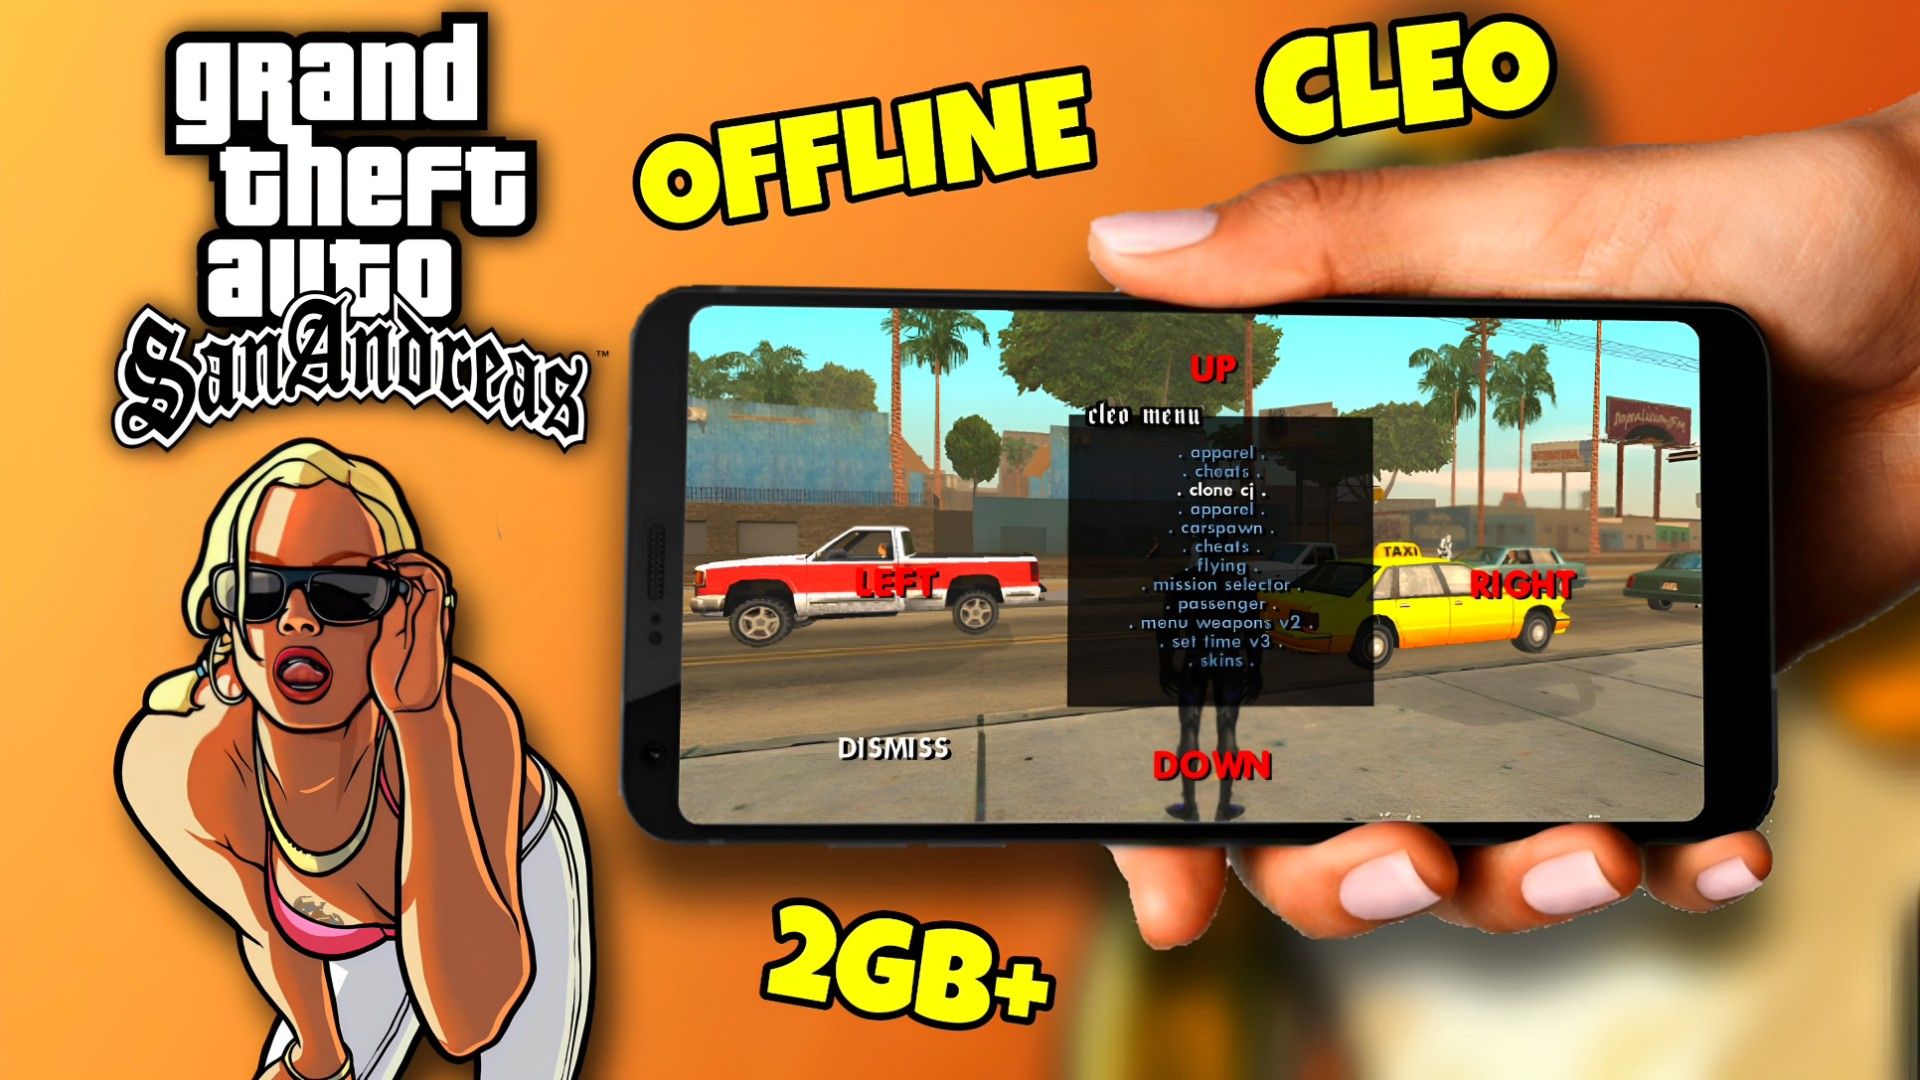 GTA 3 Cleo mods Apk + OBB + OFFLINE GAME